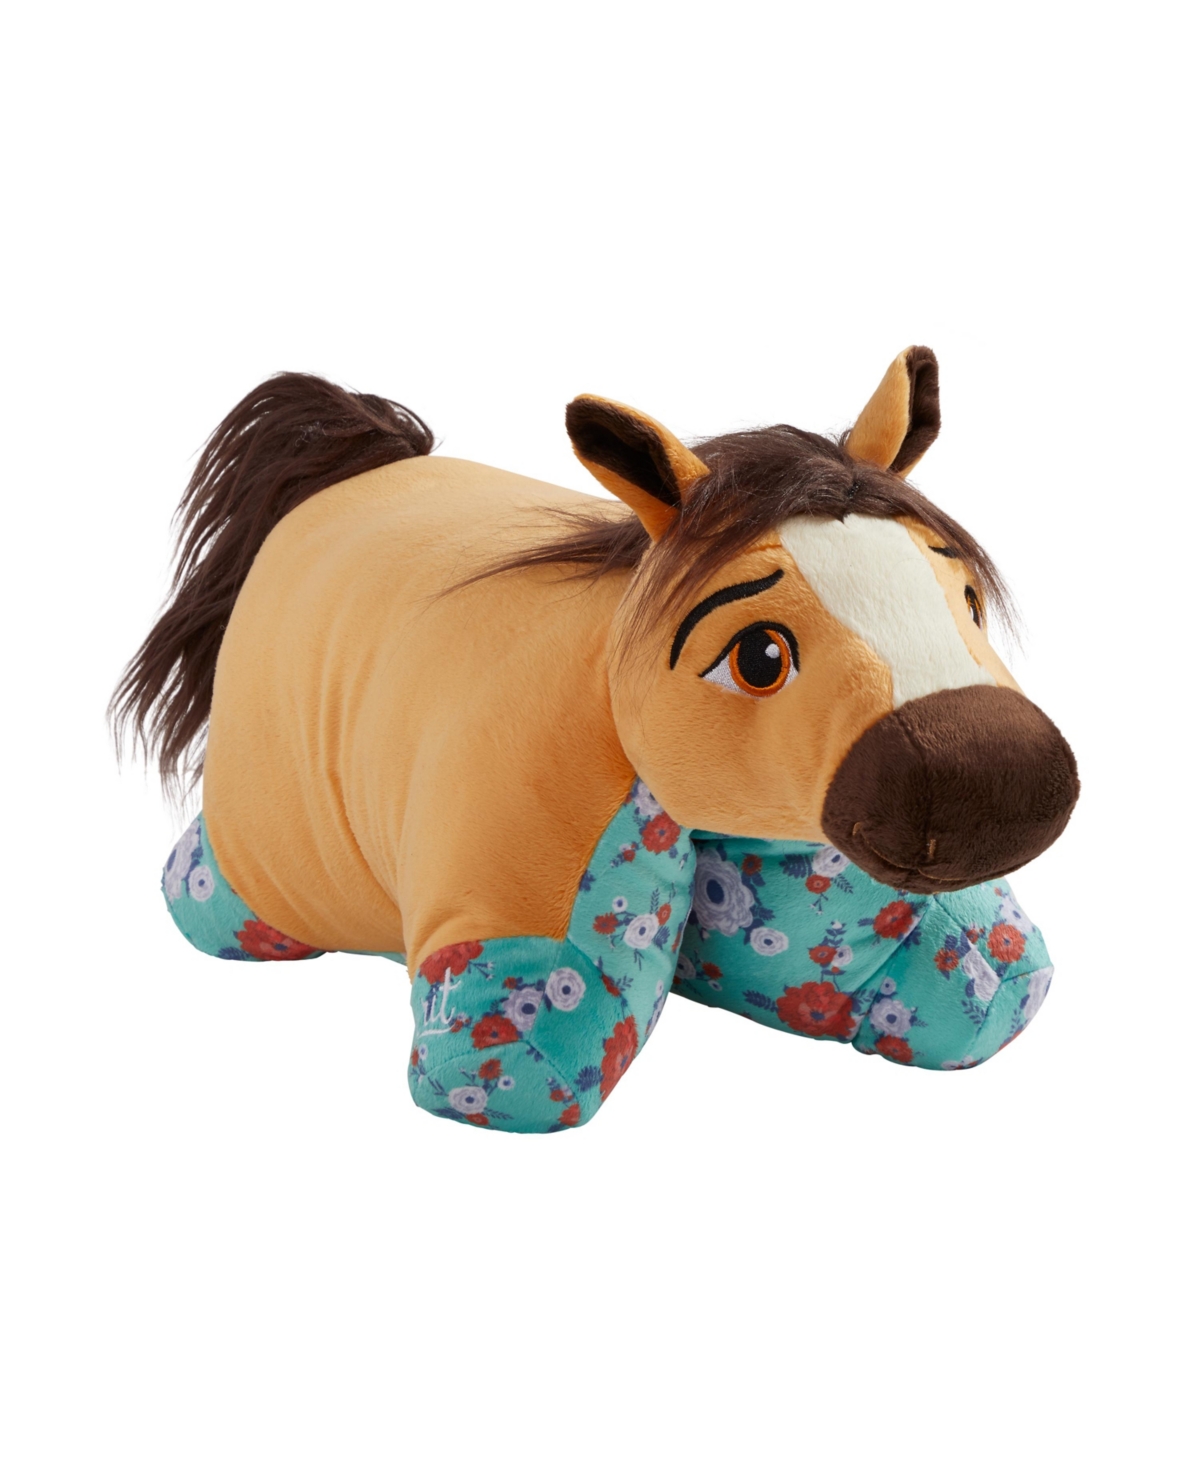 Pillow Pets Kids' Nbcuniversal Spirit Stuffed Animal Plush Toy In Brown